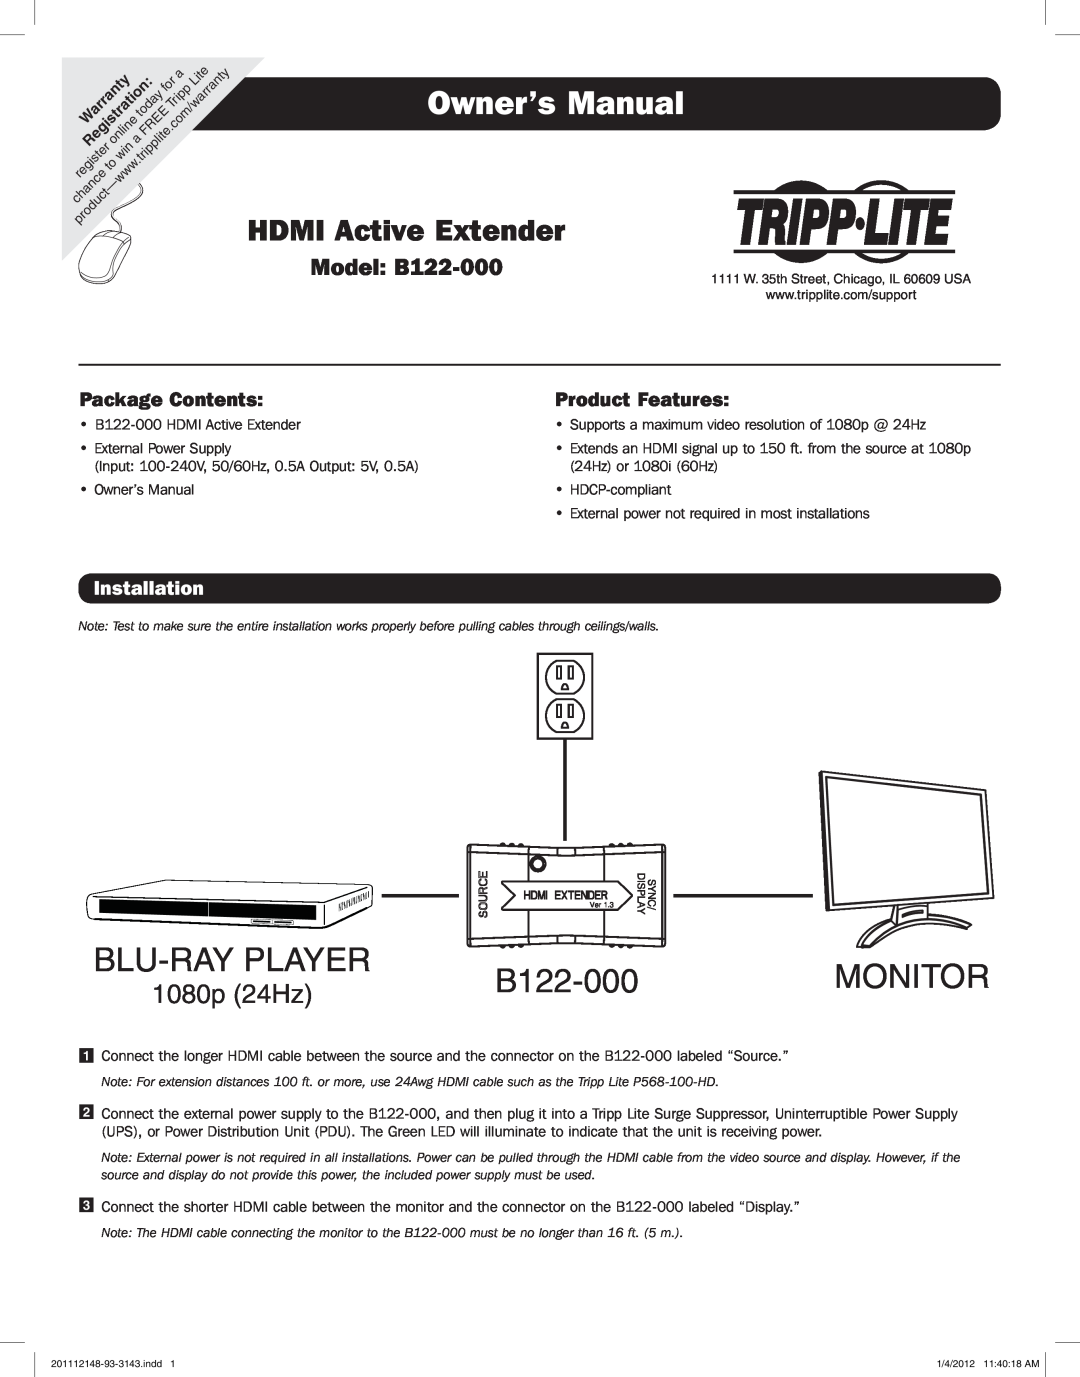 Tripp Lite warranty Installation, Blu-Ray Player, Monitor, HDMI Active Extender, 1080p 24Hz, Model B122-000 